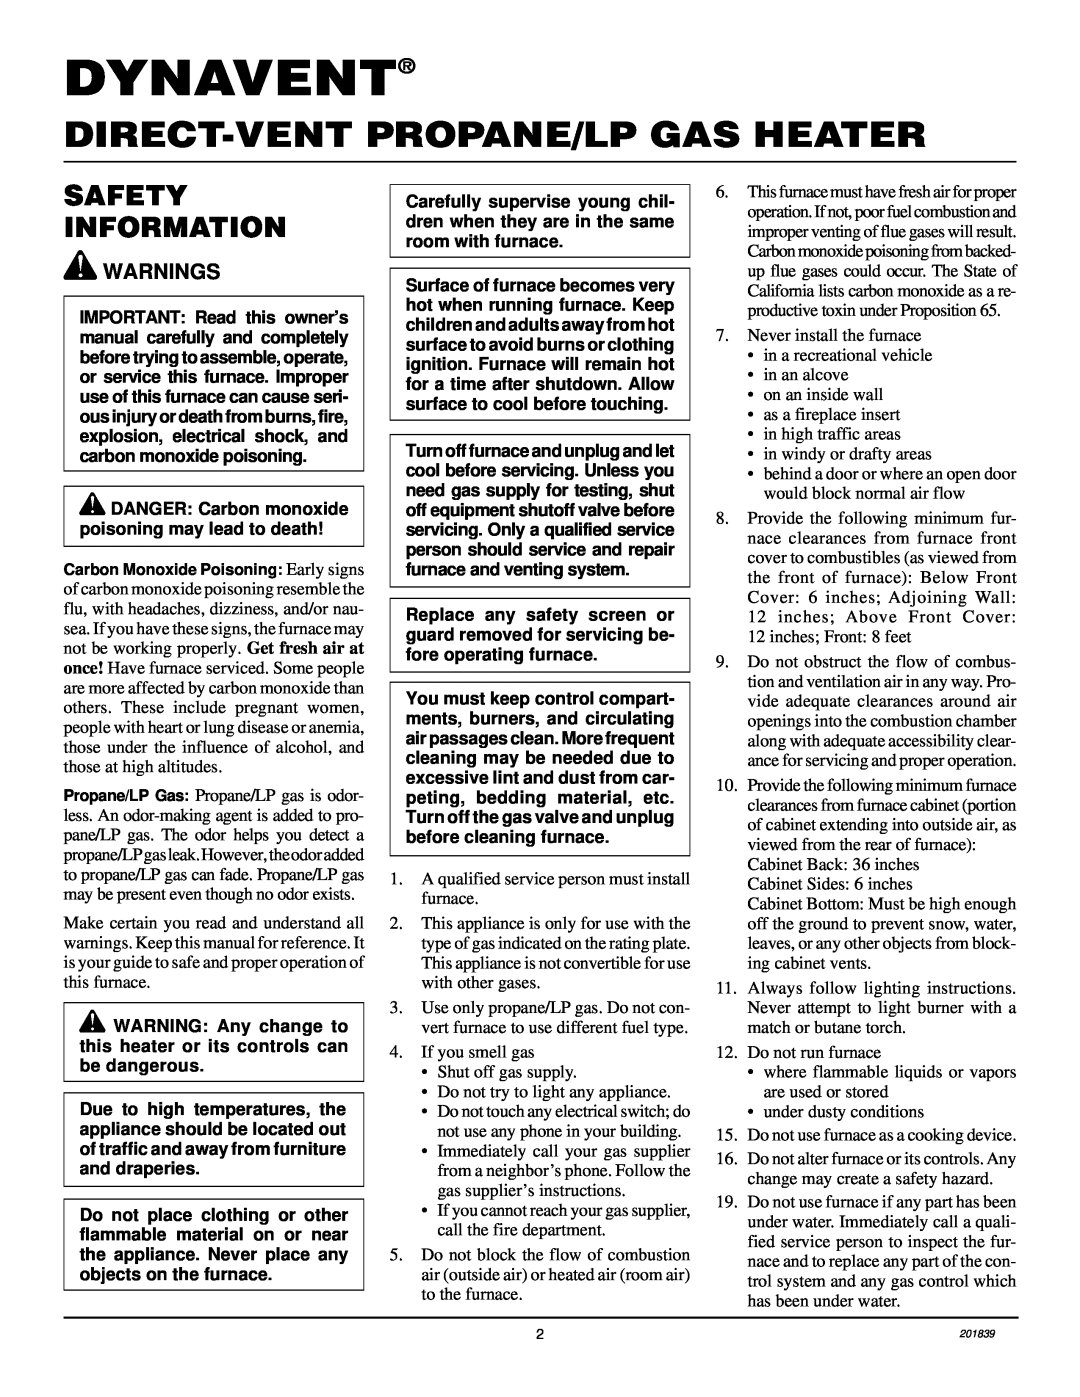 Desa DNV25PB, DNV40PB installation manual Dynavent, Safety Information, Direct-Ventpropane/Lp Gas Heater 